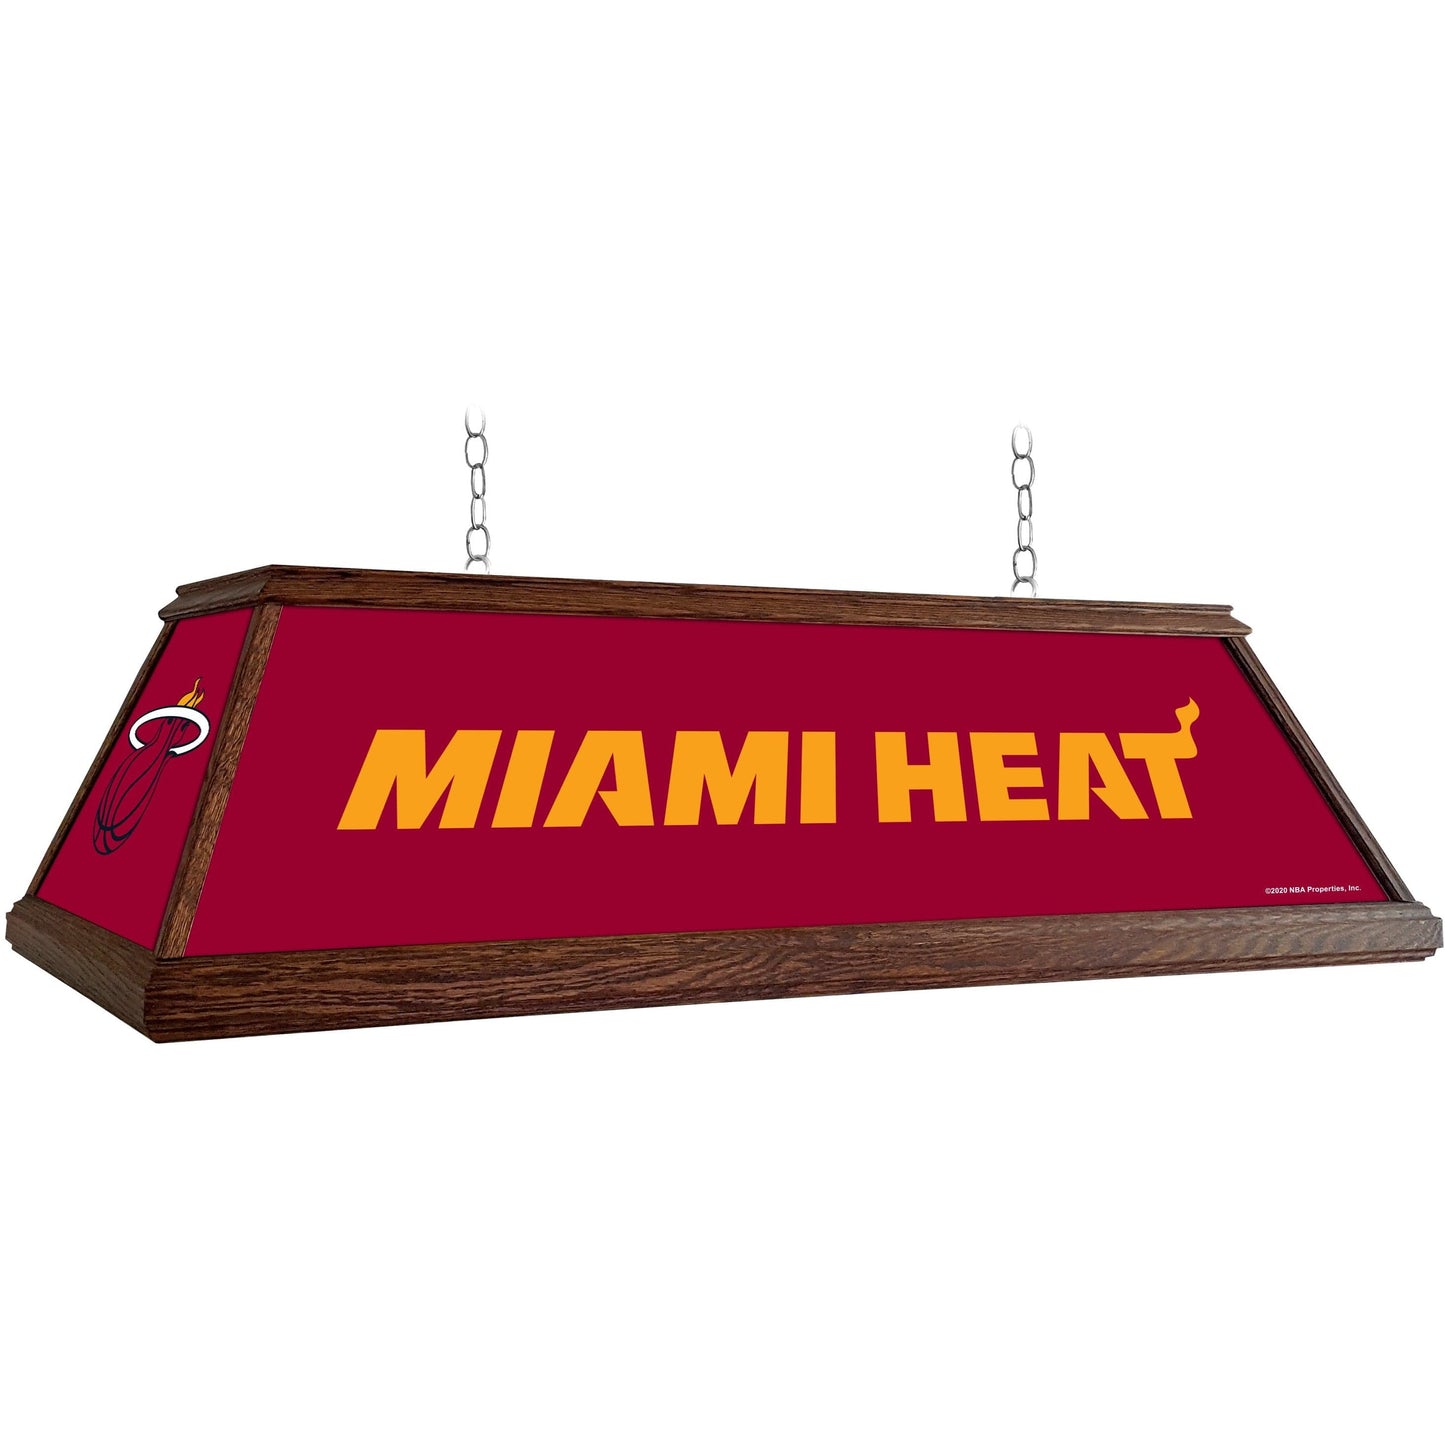 Miami Heat: Premium Wood Pool Table Light - The Fan-Brand